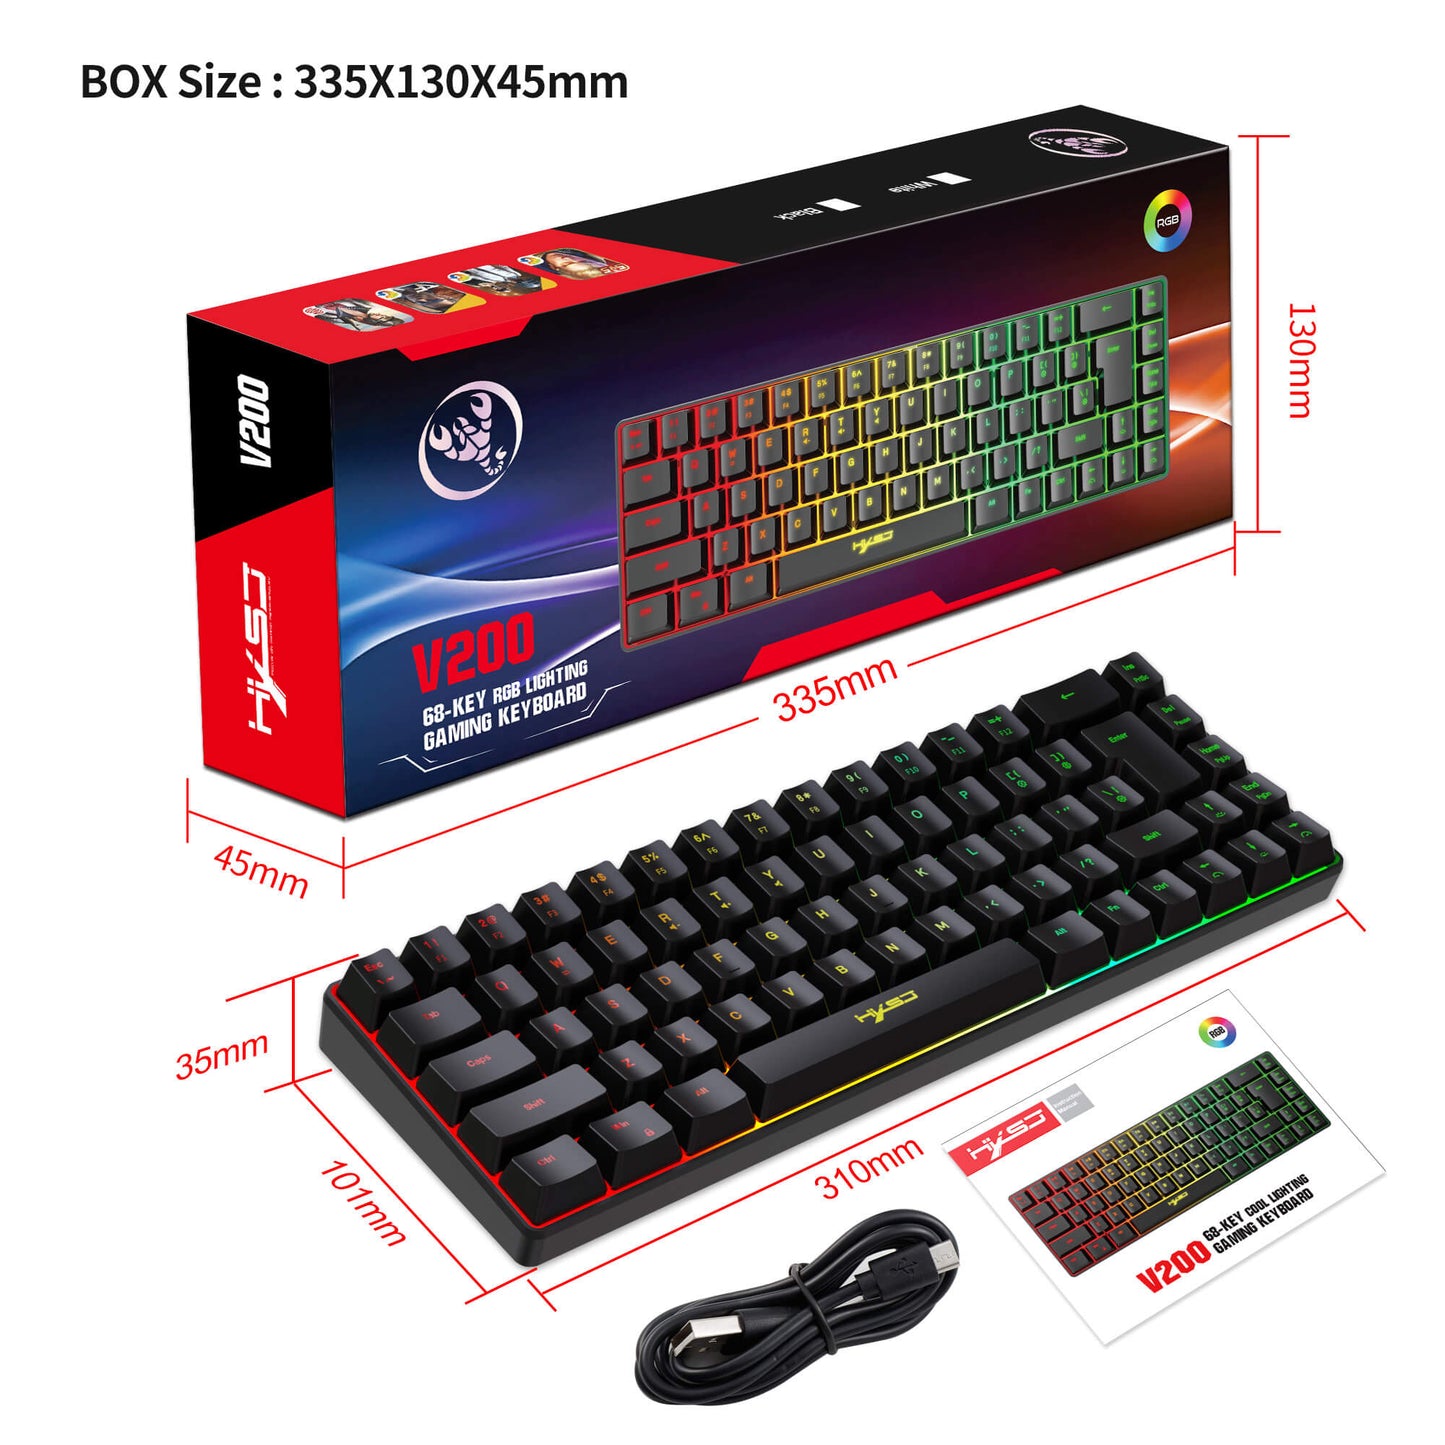 Wired Gaming Keyboard, 68-Key RGB Lighting Gaming Keyboard, RGB Backlit Mini Keyboard, Small Ultra-Compact 68 Keys Keyboard for PC/Mac Gamer, Typist, Travel, Easy to Carry on Business Trip - Black